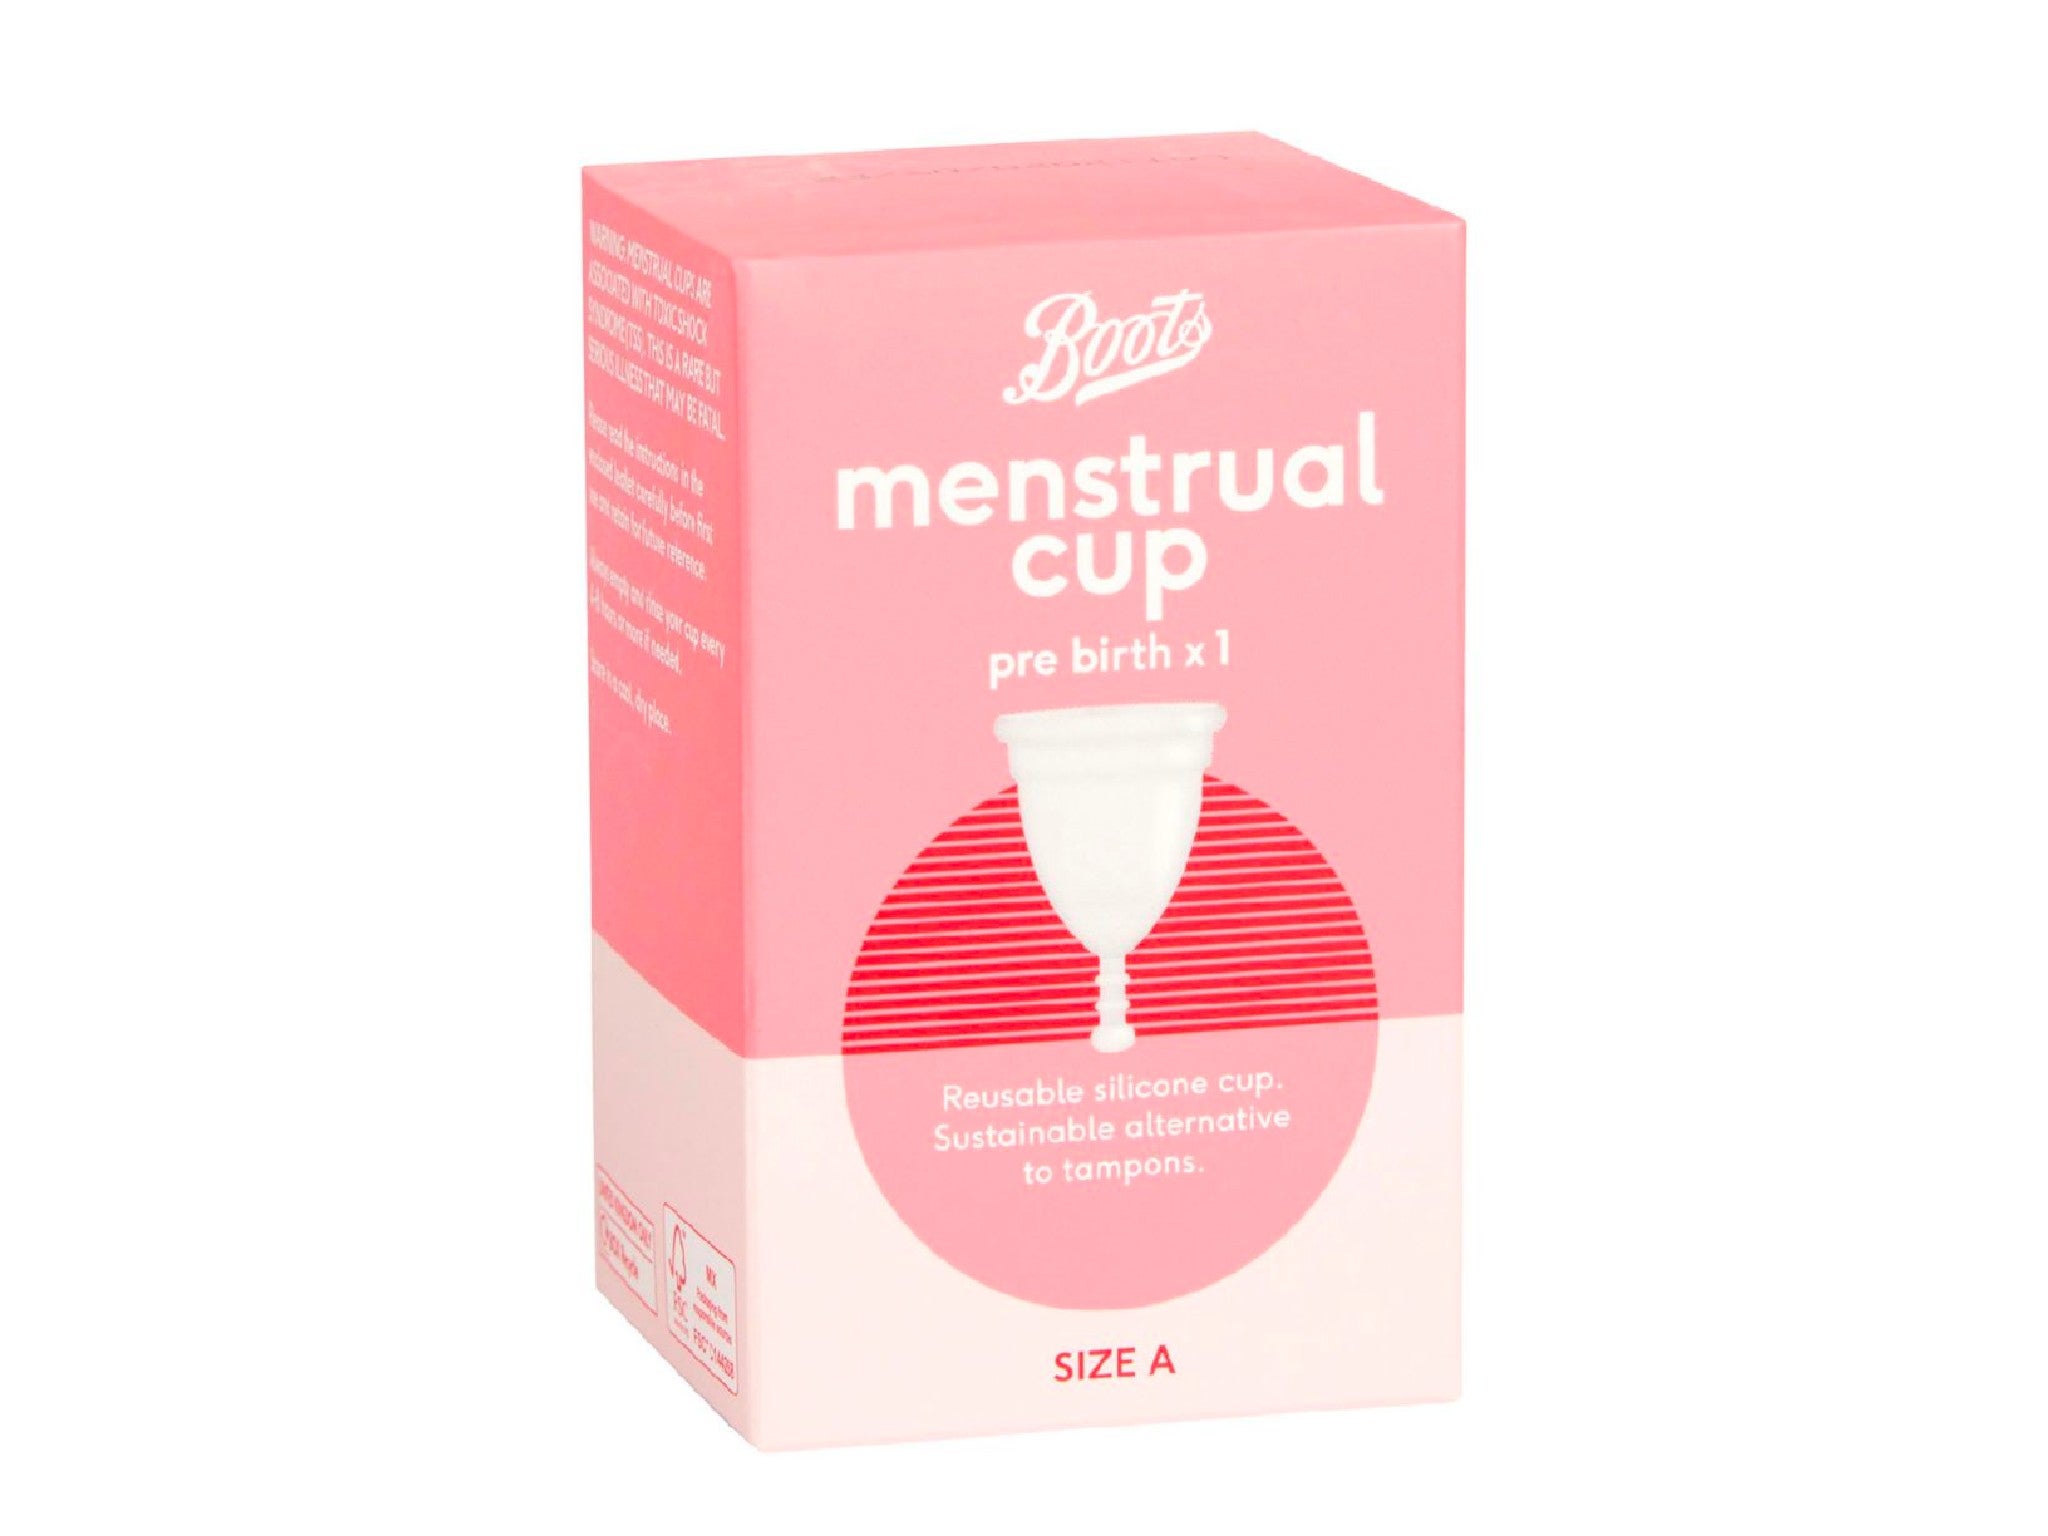 Boots menstrual cup indybest.jpg